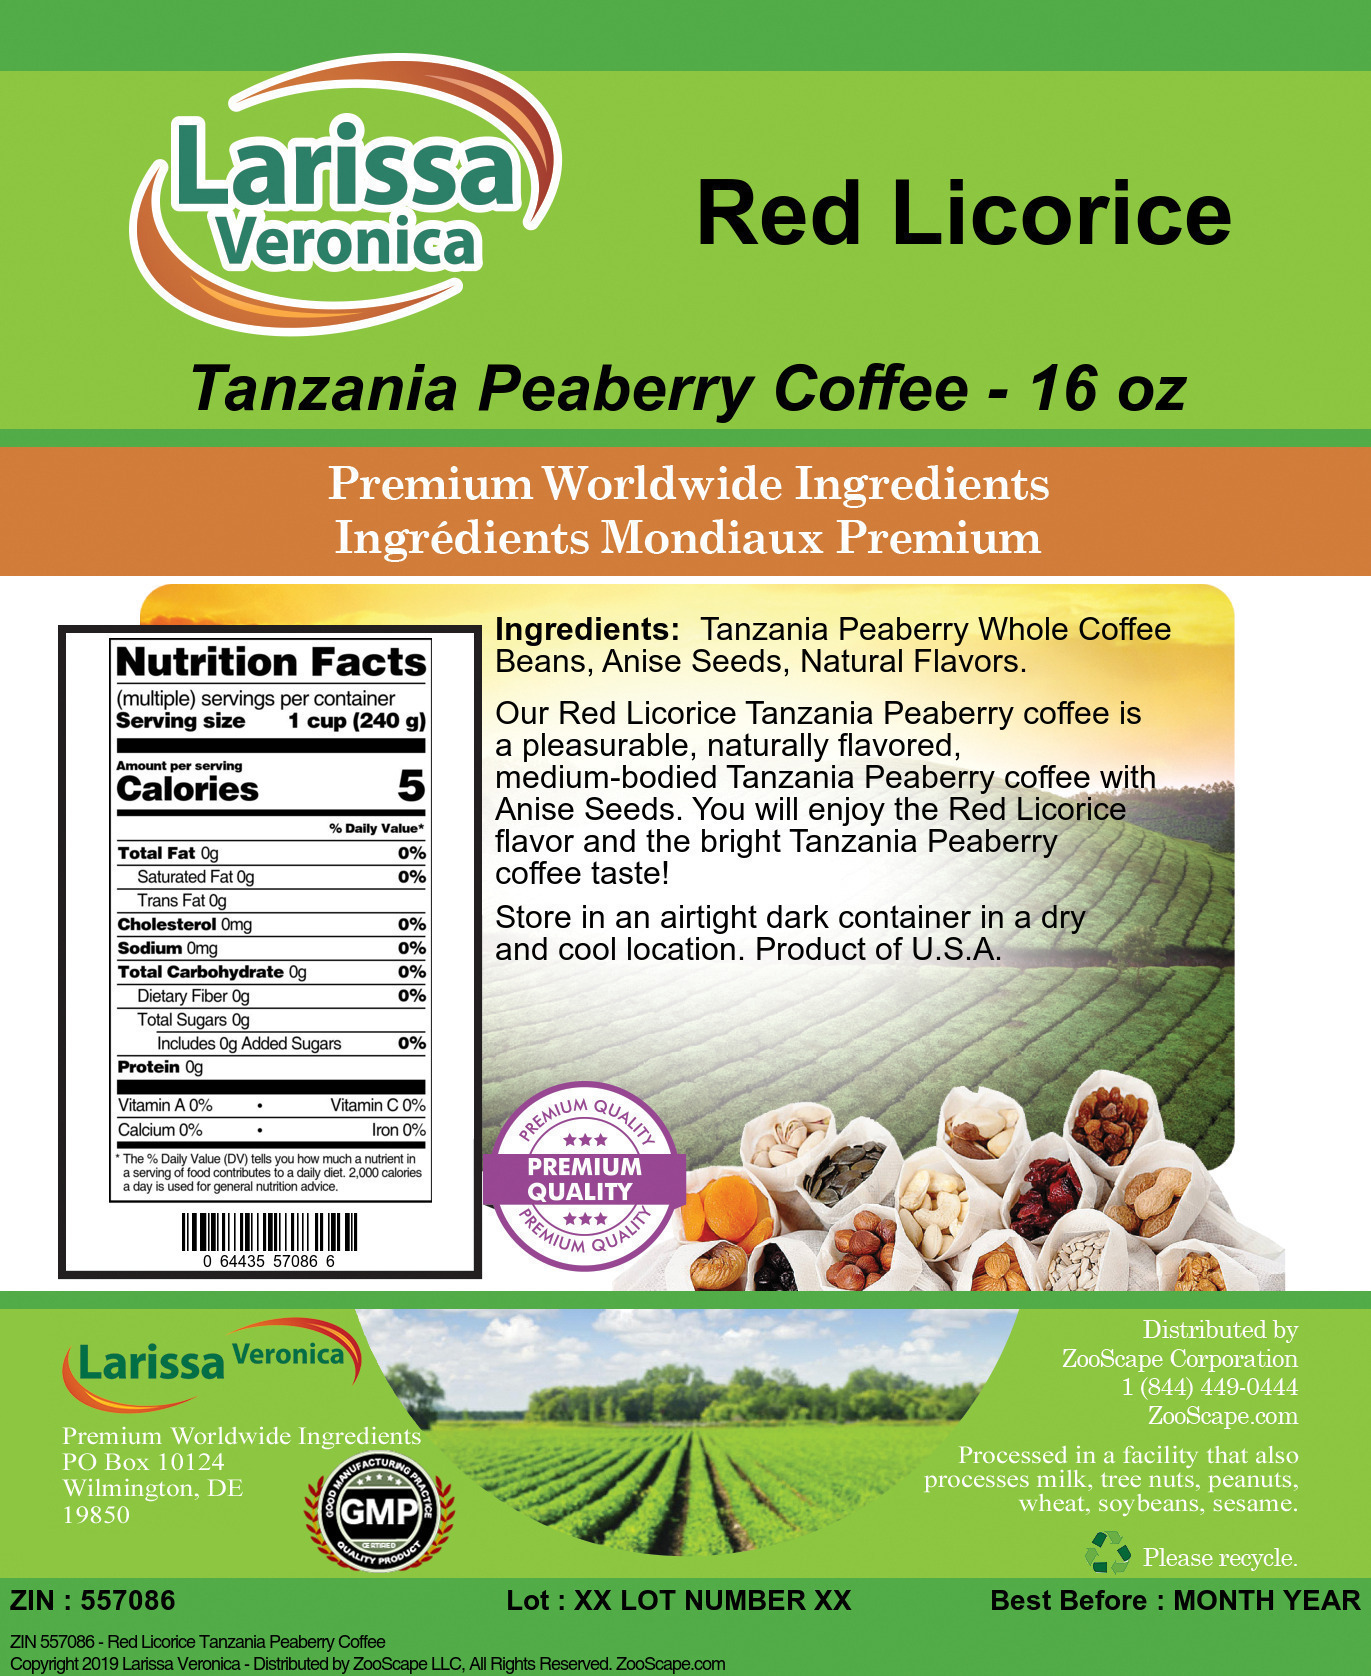 Red Licorice Tanzania Peaberry Coffee - Label